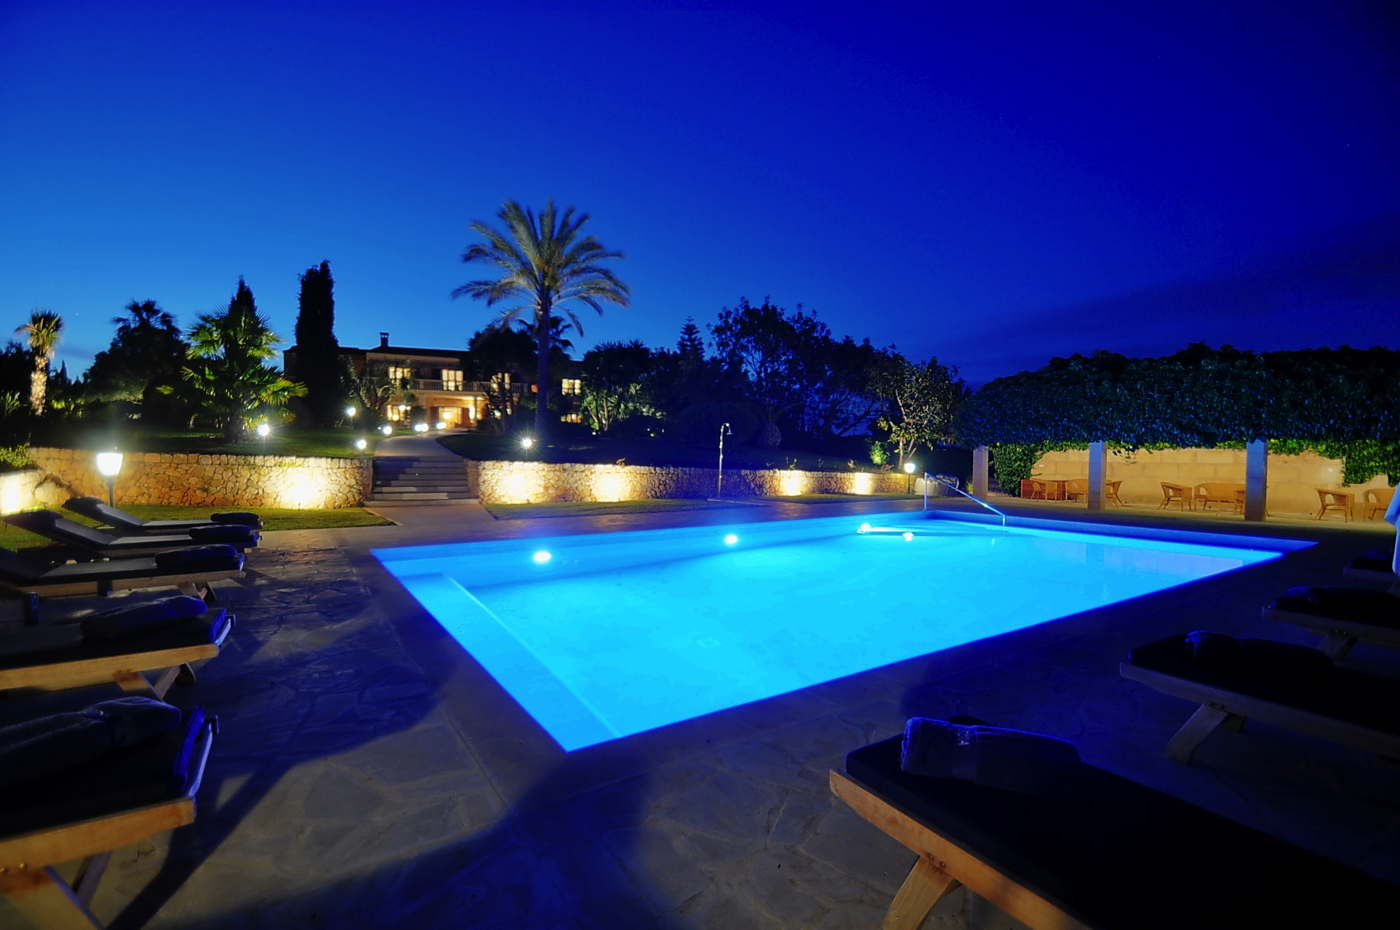 self catering villa-rental villa-holiday rental-vacation villa in Spain-Balearic Islands-Majorca-Porto Cristo